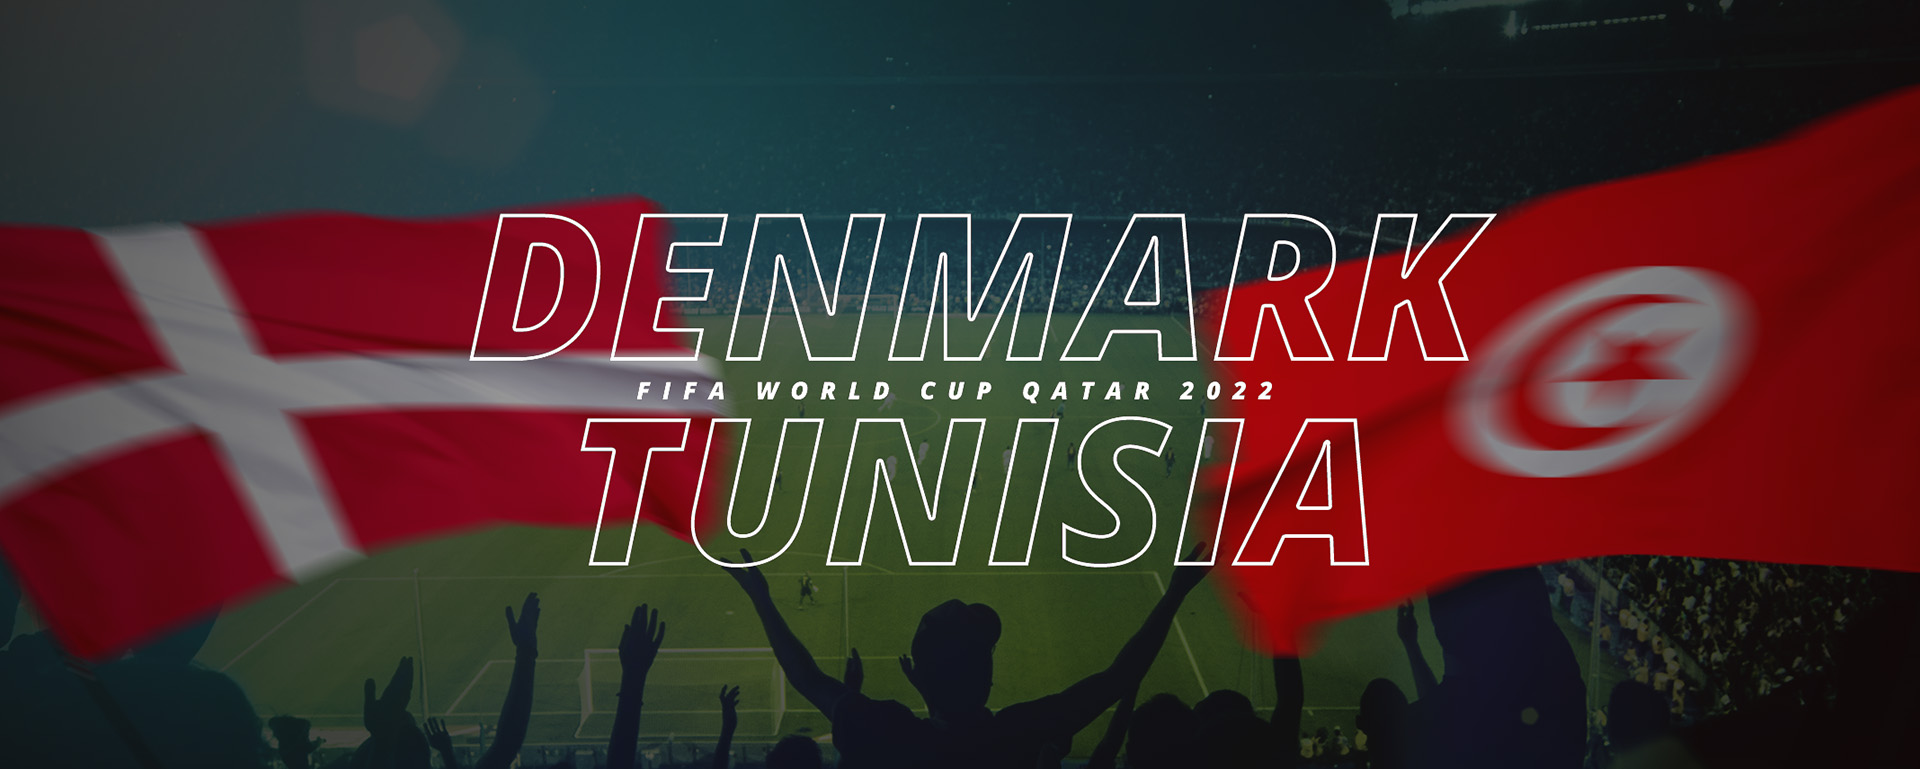 DENMARK VS TUNISIA | FIFA WORLD CUP QATAR 2022